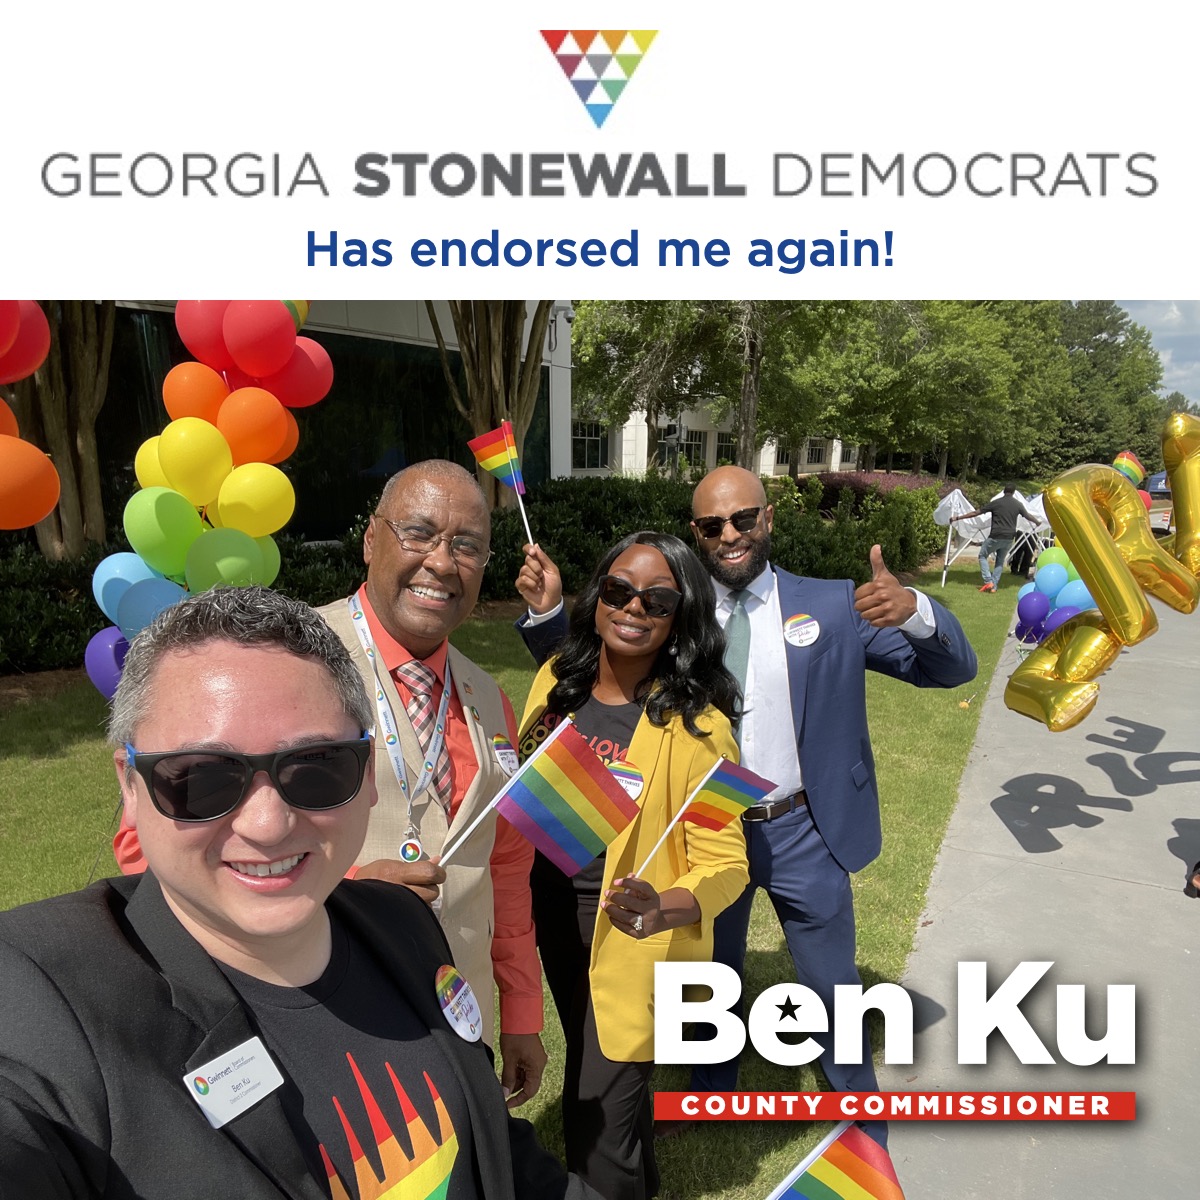 Georgia Stonewall Democrats 2022 endorsed candidate